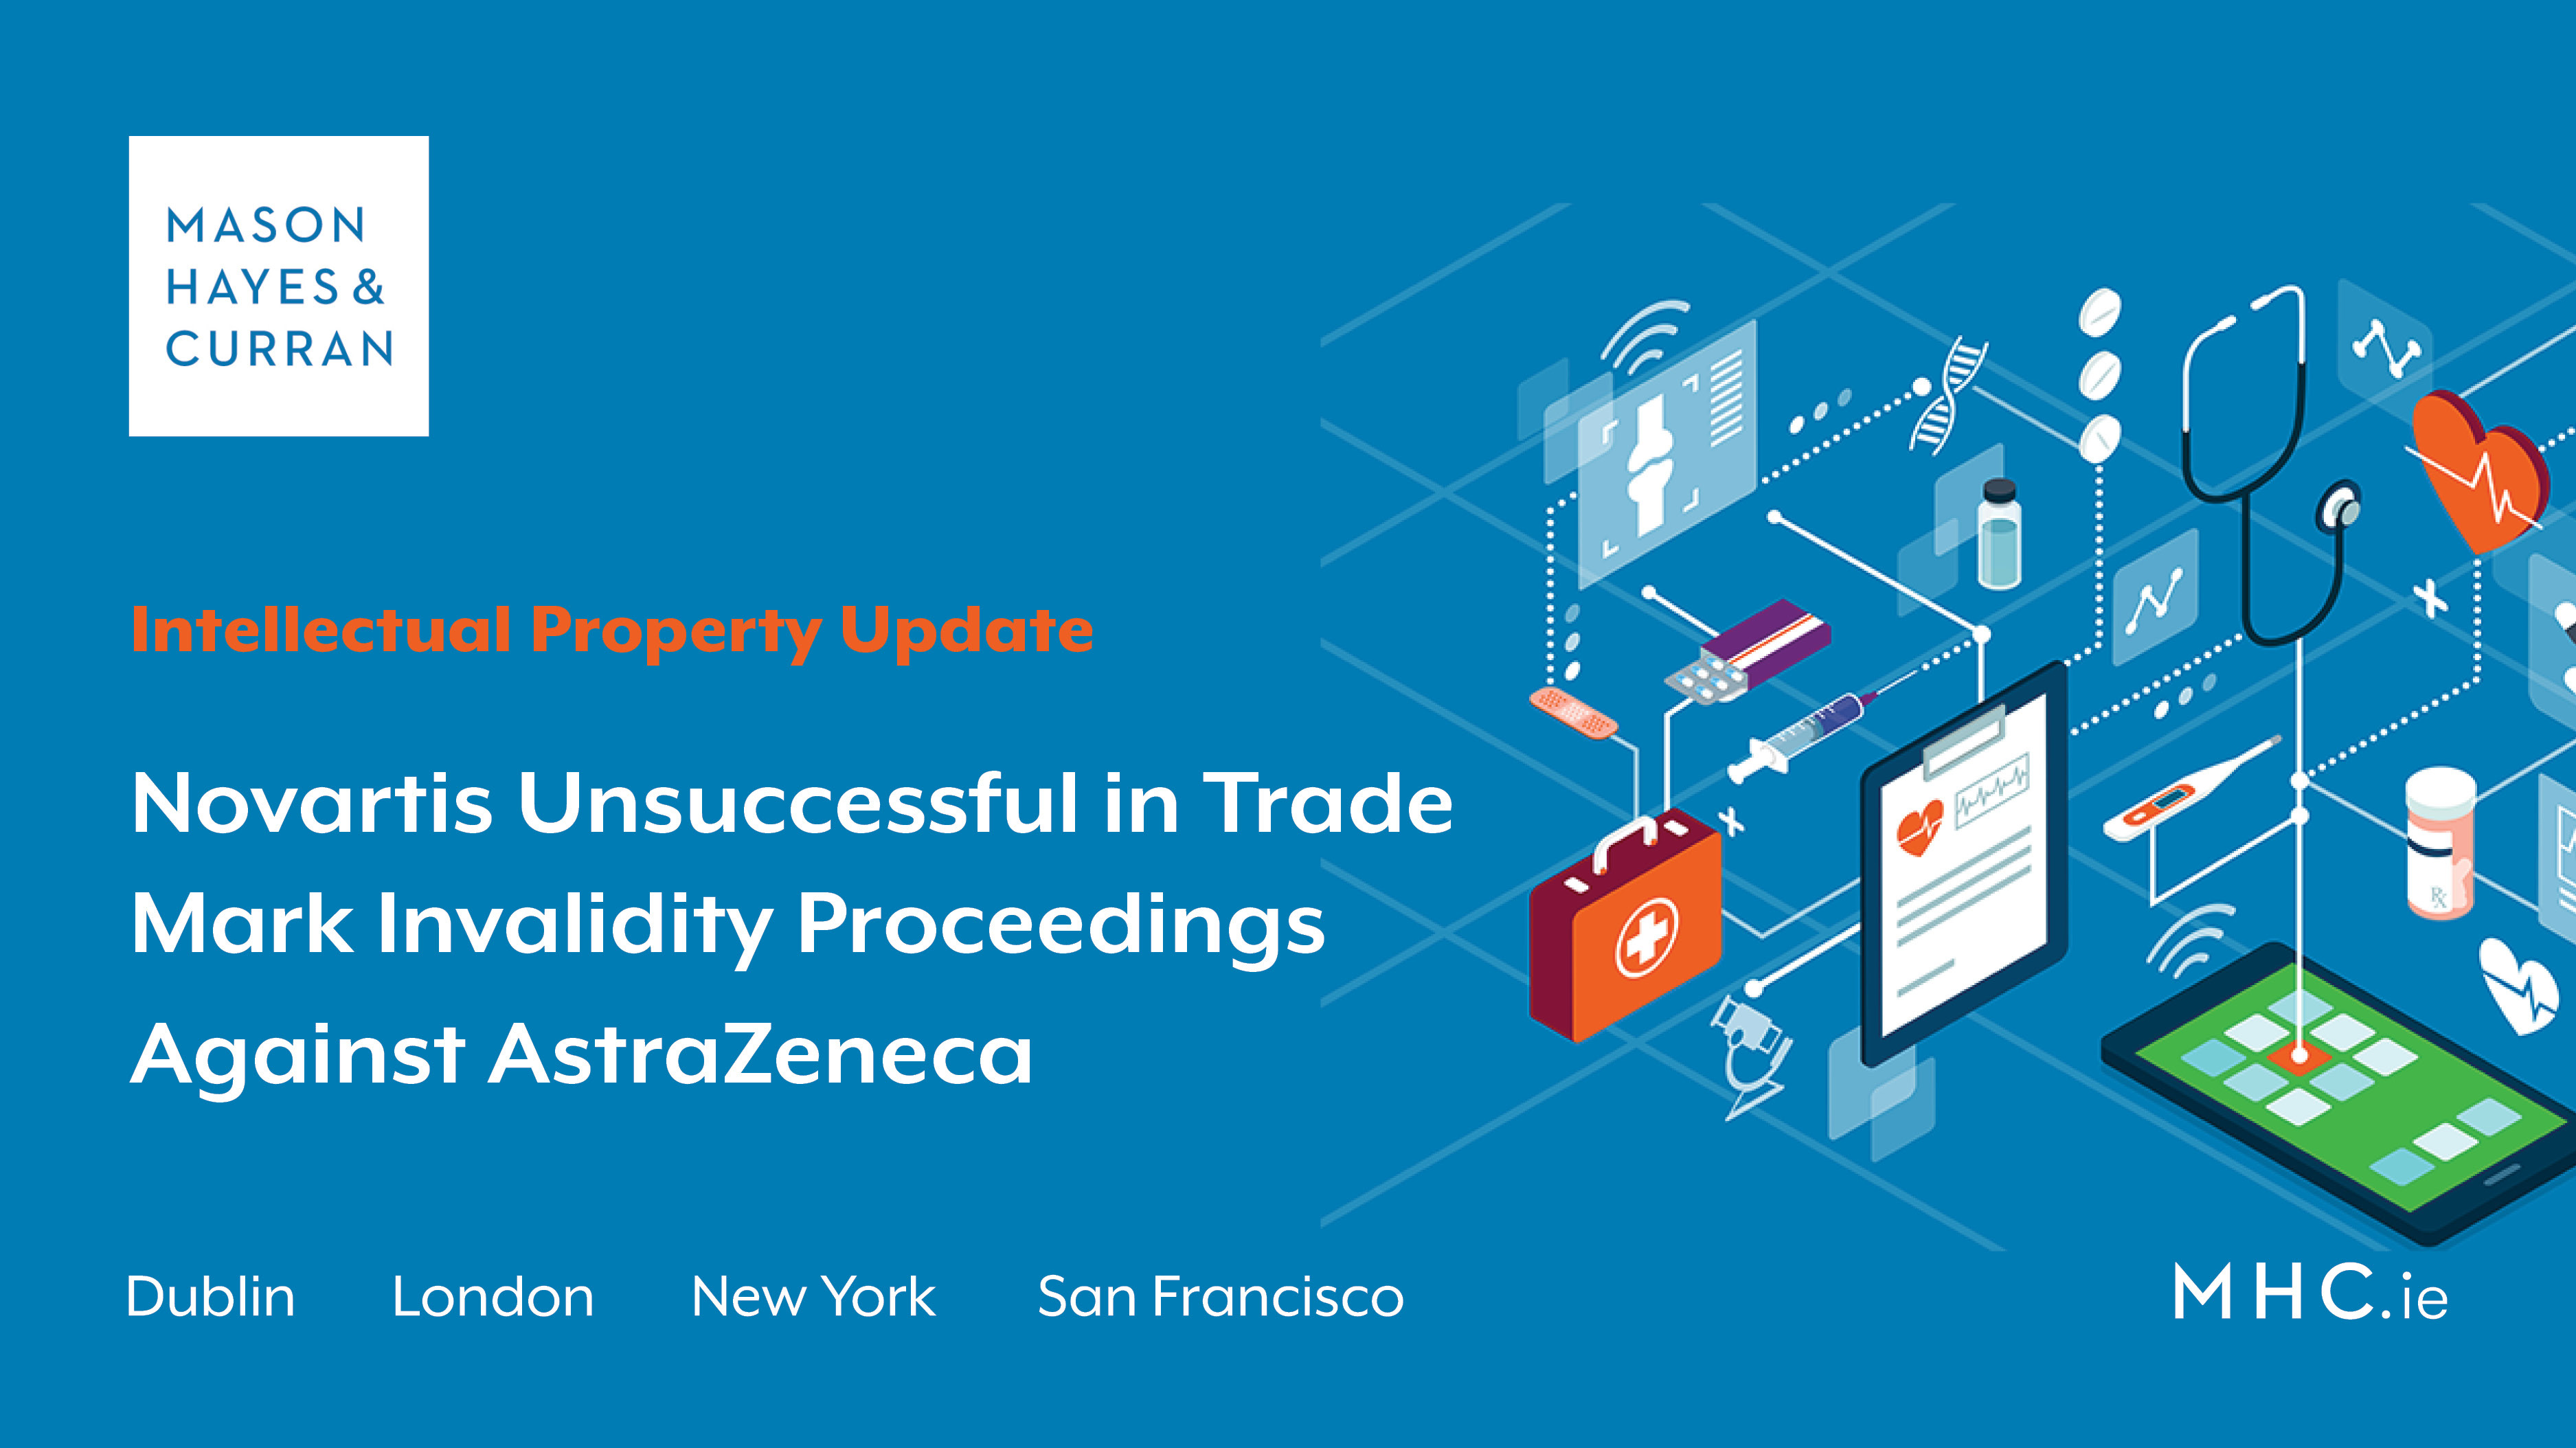 Novartis Unsuccessful in Trade Mark Invalidity Proceedings Against AstraZeneca